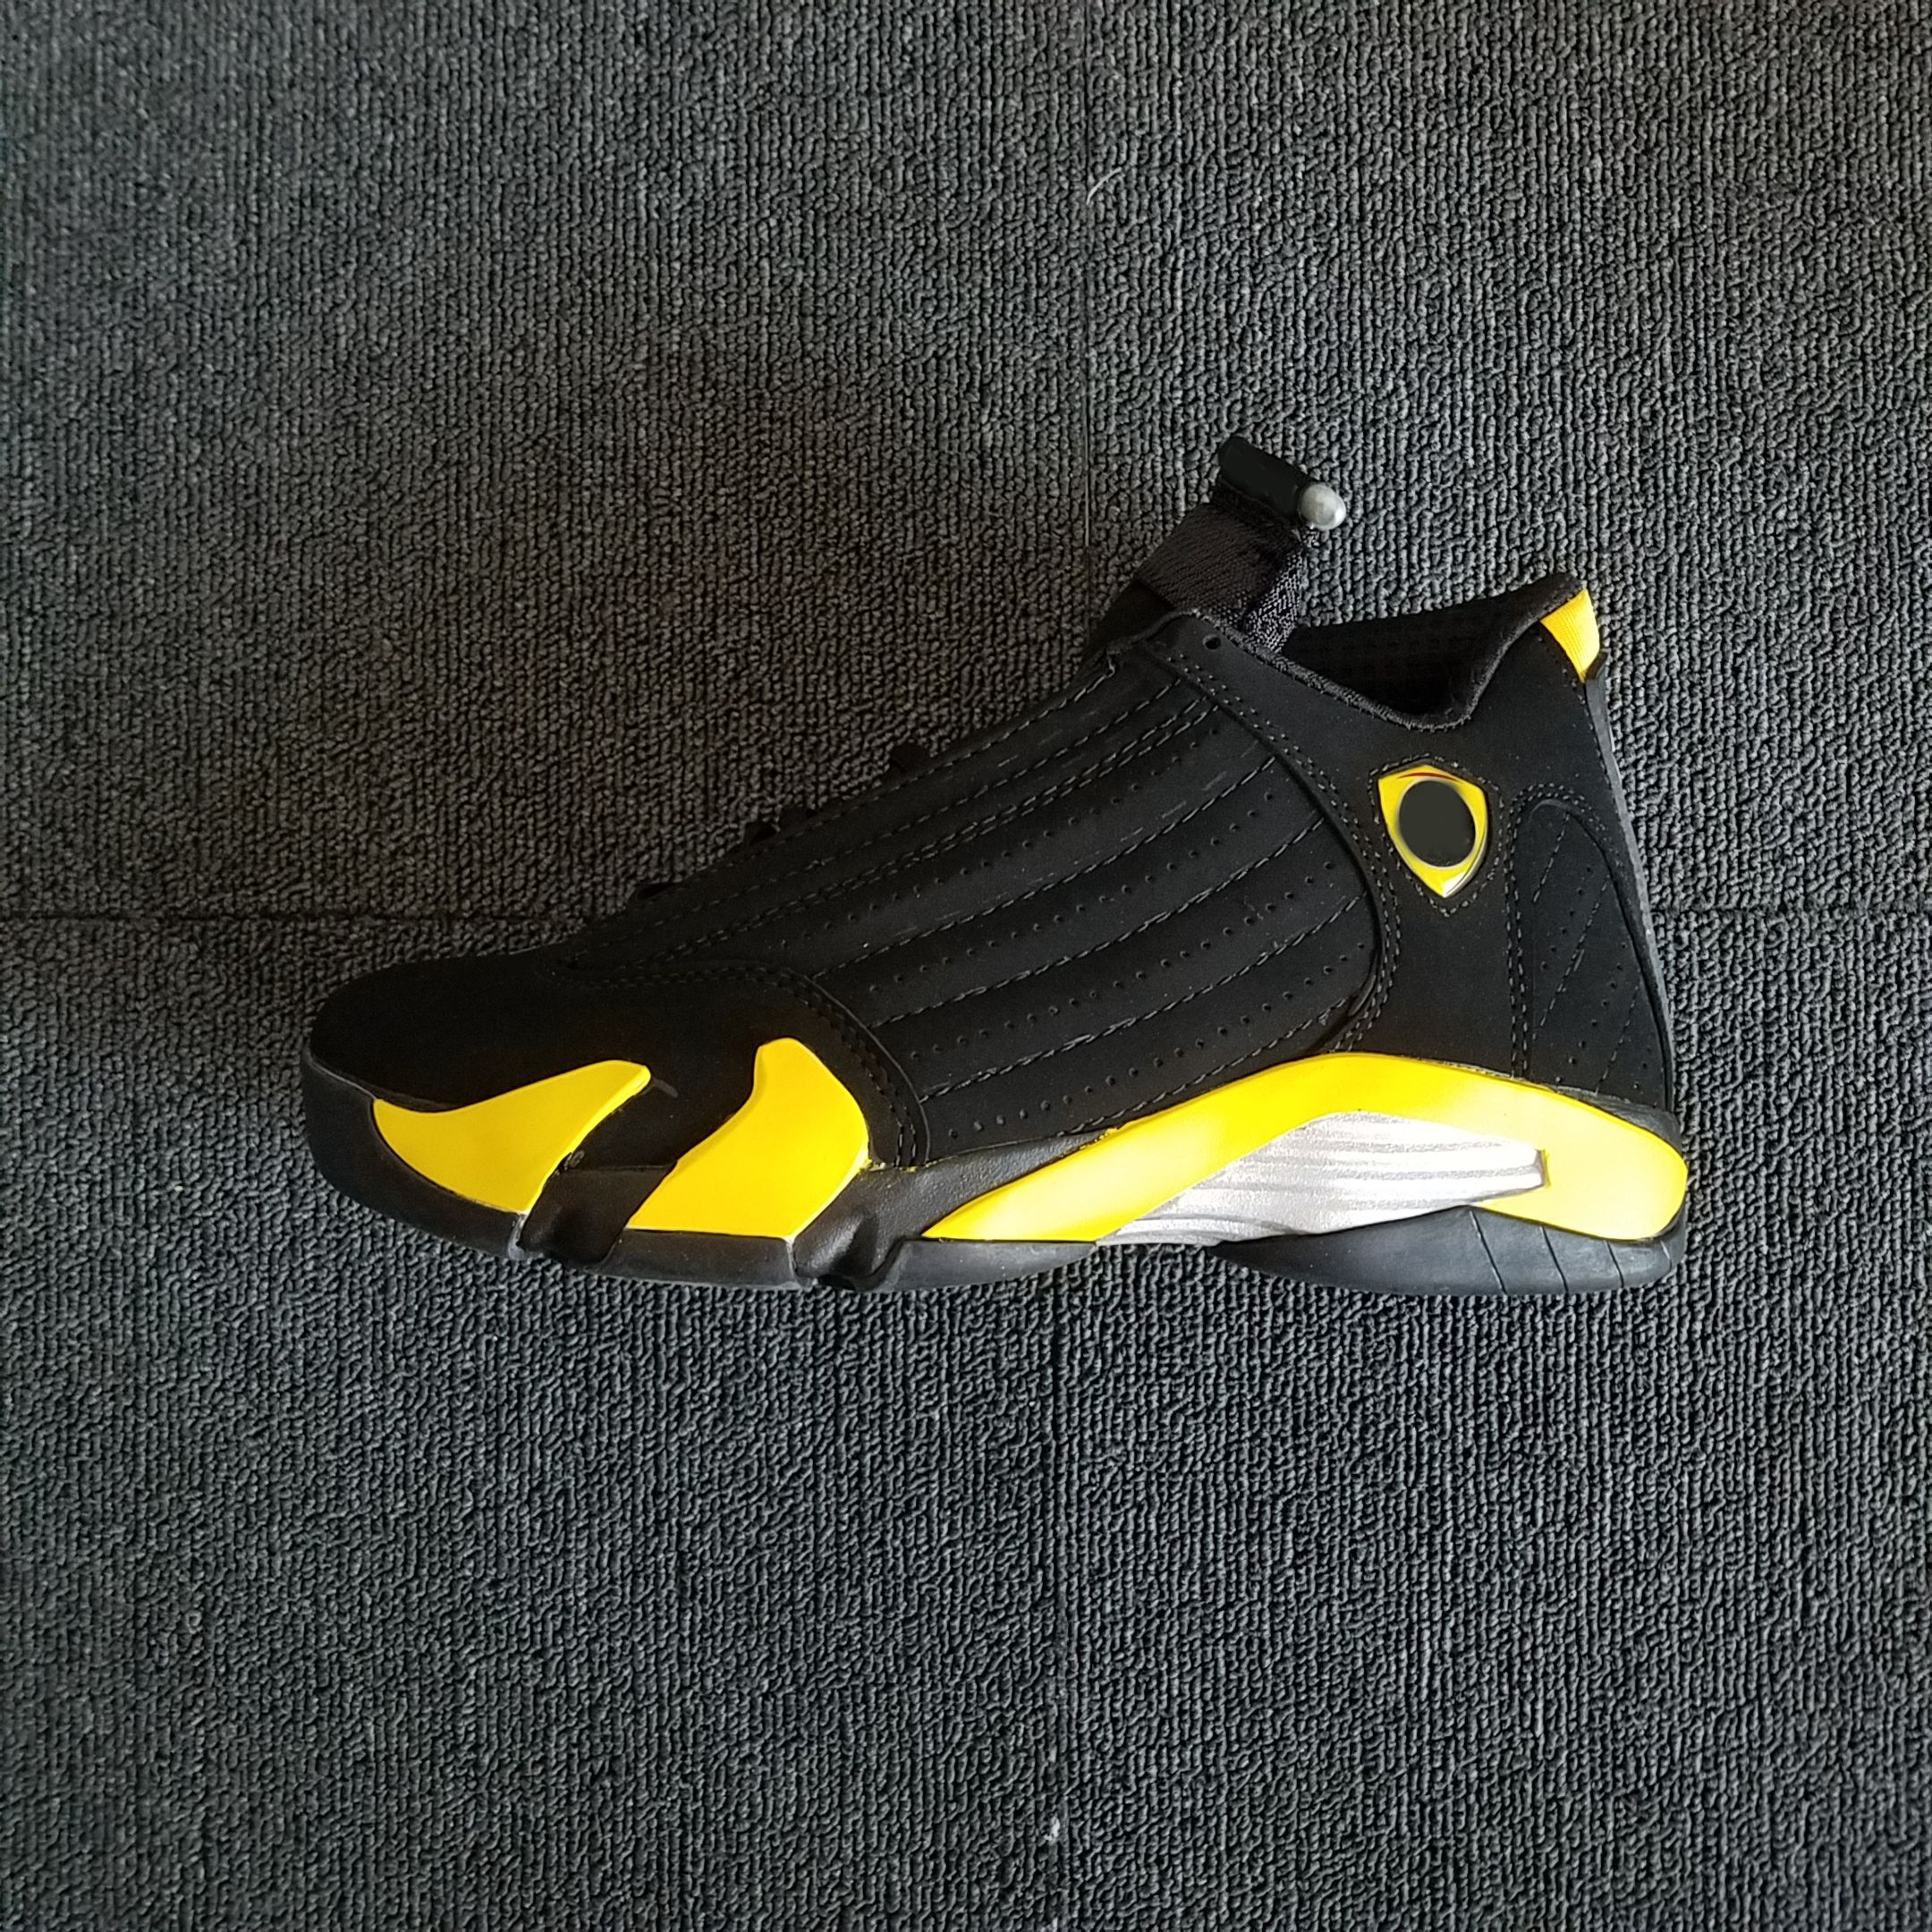 Black Yellow 14 Basketball Shoes Women 